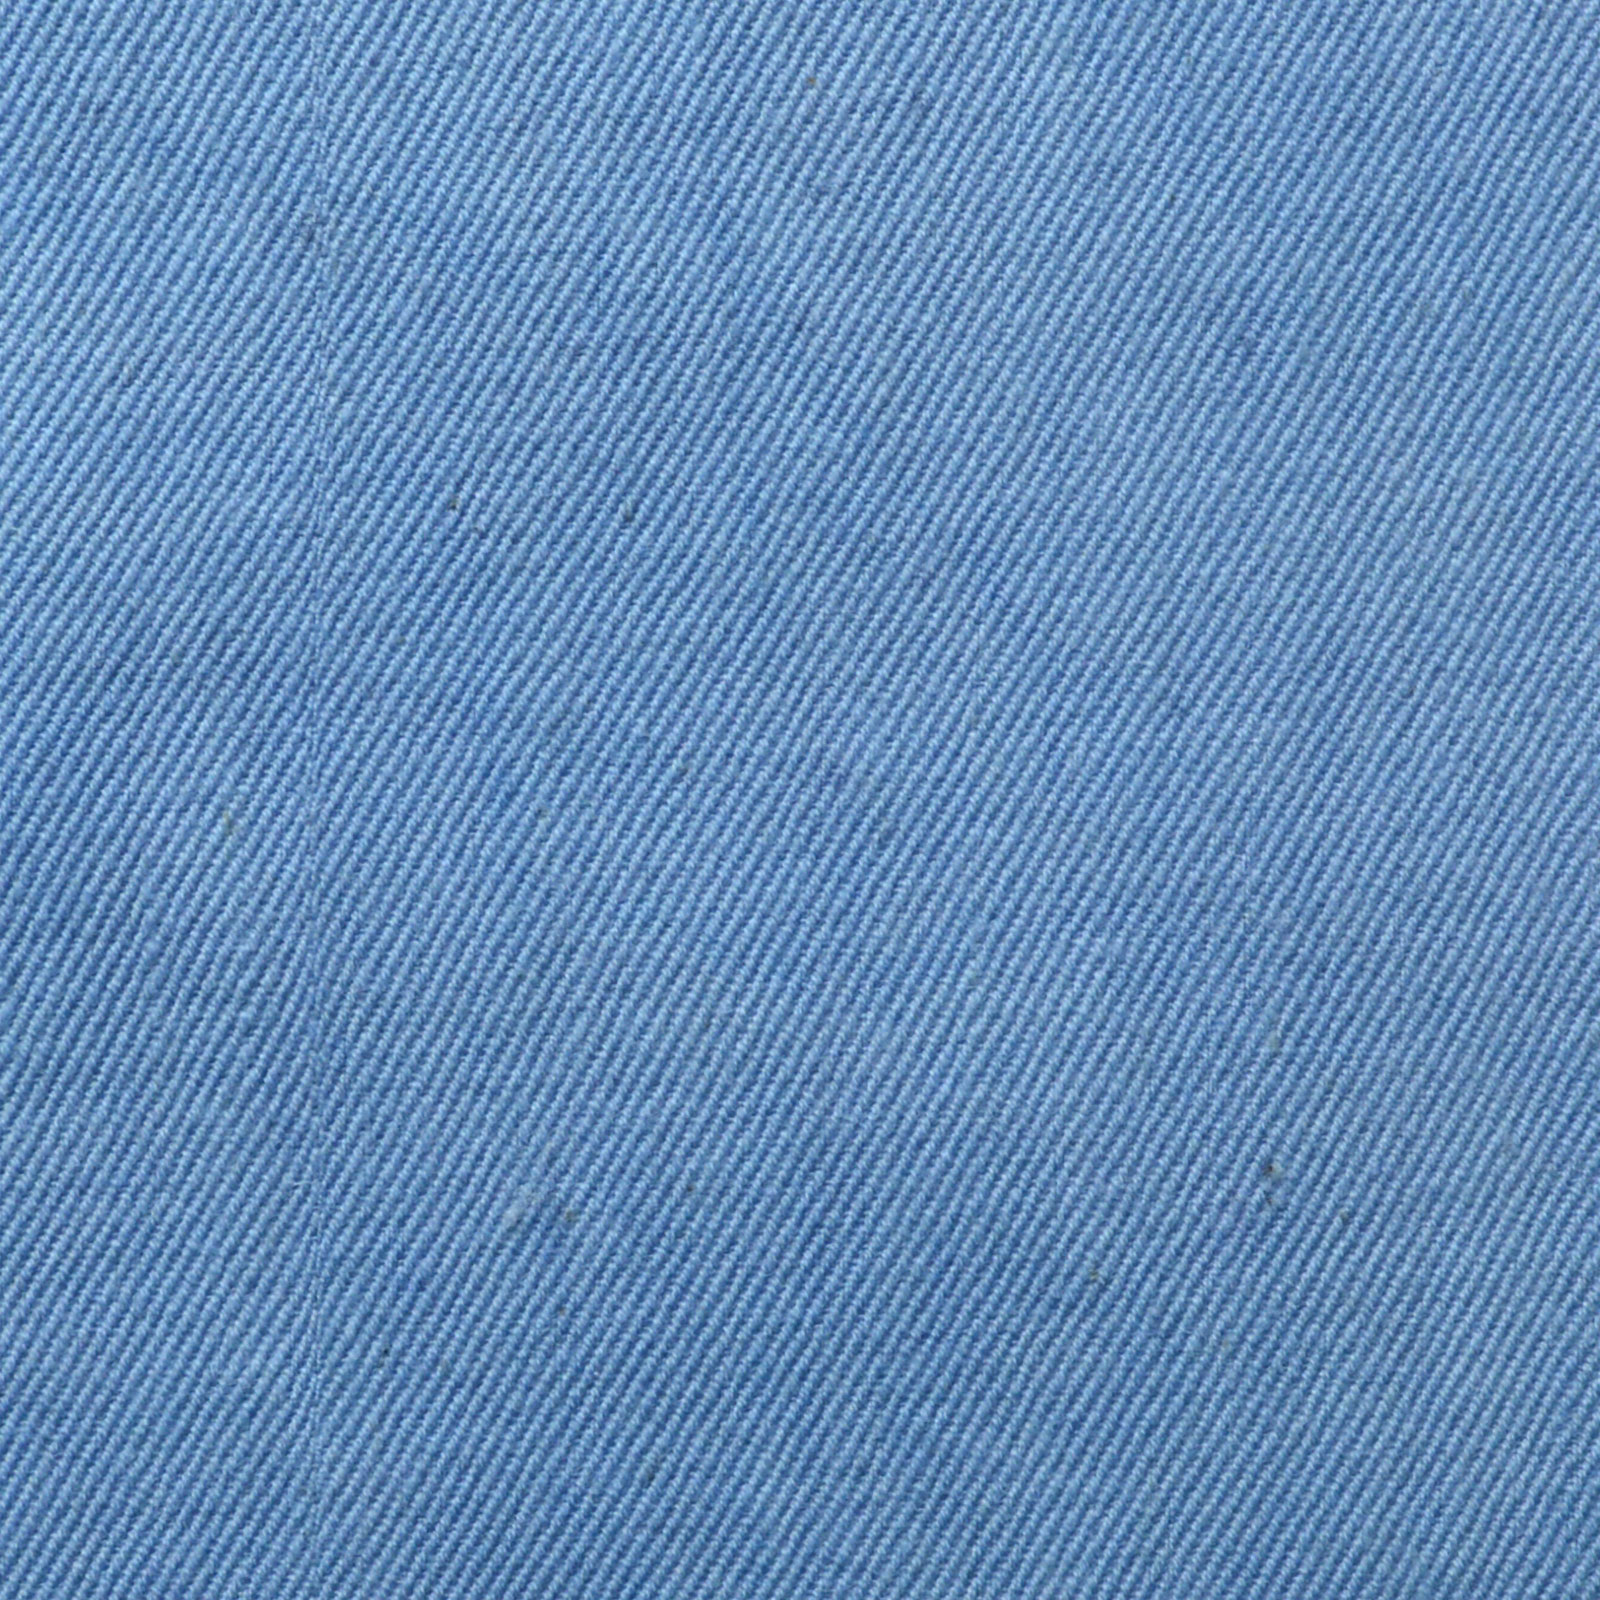 Light Weight Handloom Selvedge Denim 4.5 Oz - Carolina Blue - Fabric Dyed - Natural Indigo